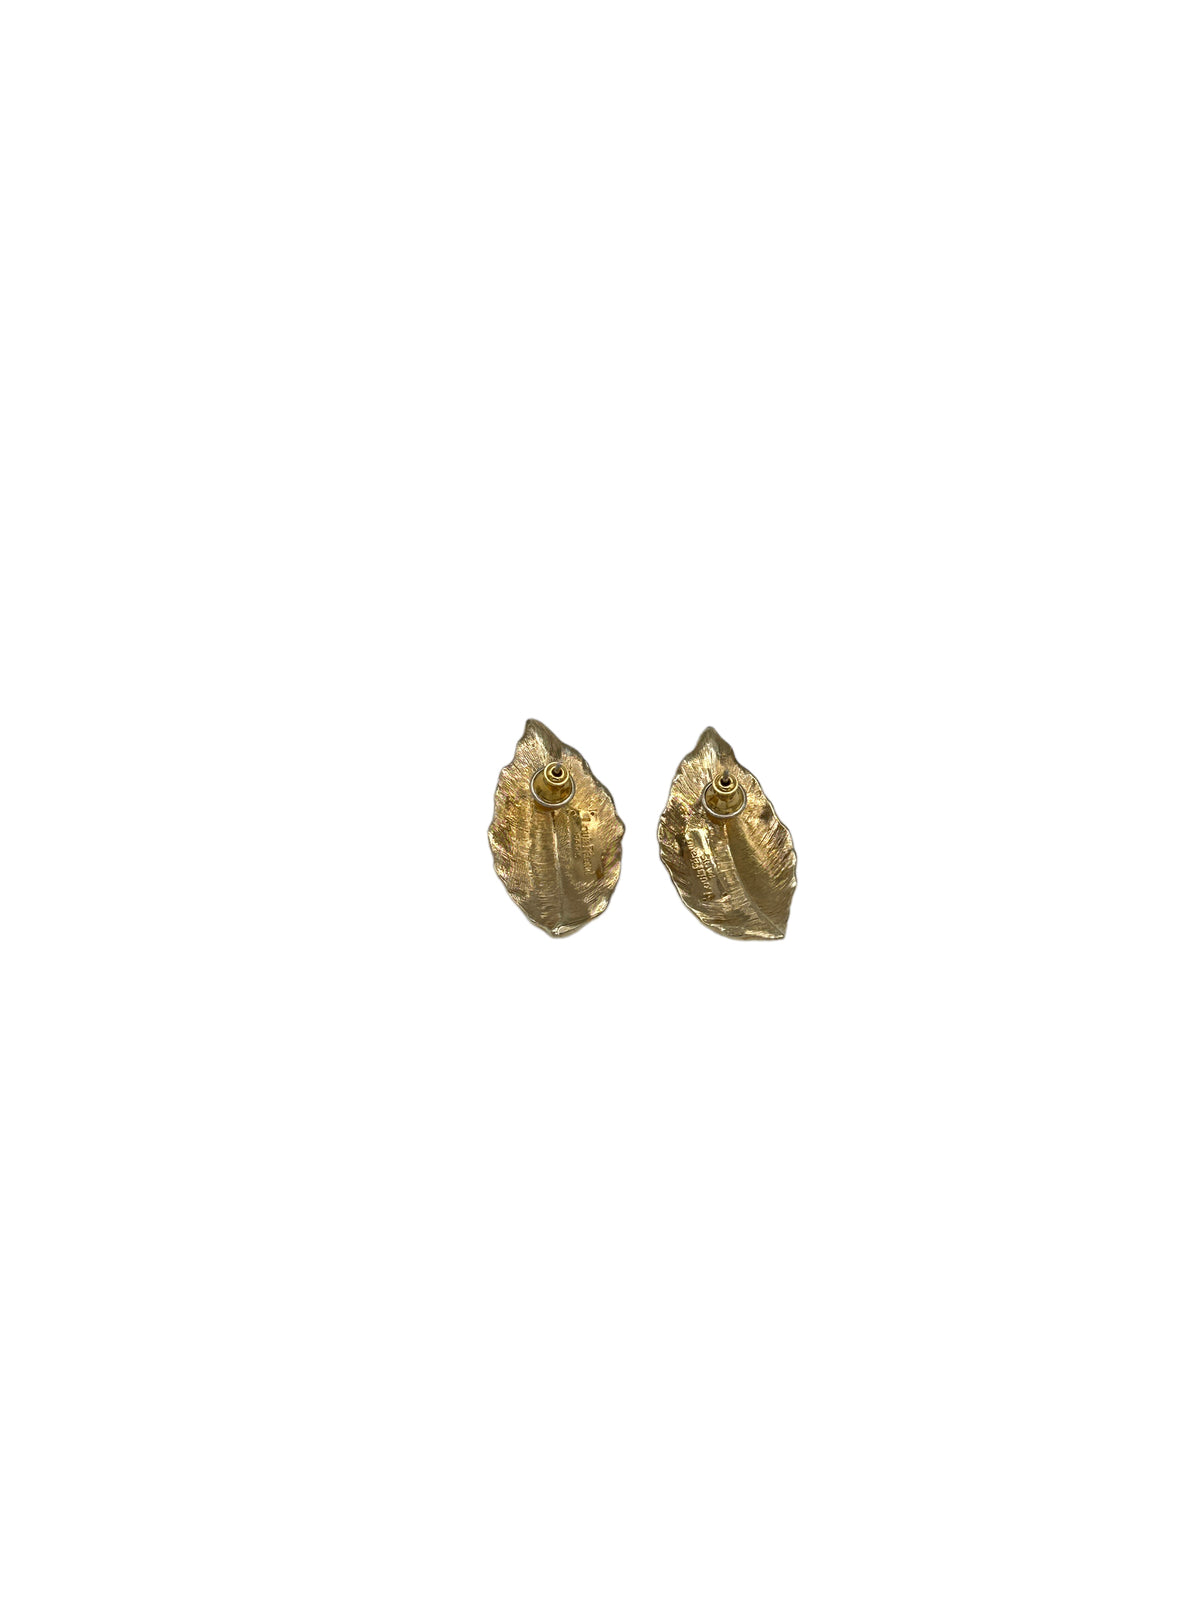 Vintage Louis Feraud Paris Gold Leaf Stud Earrings French 